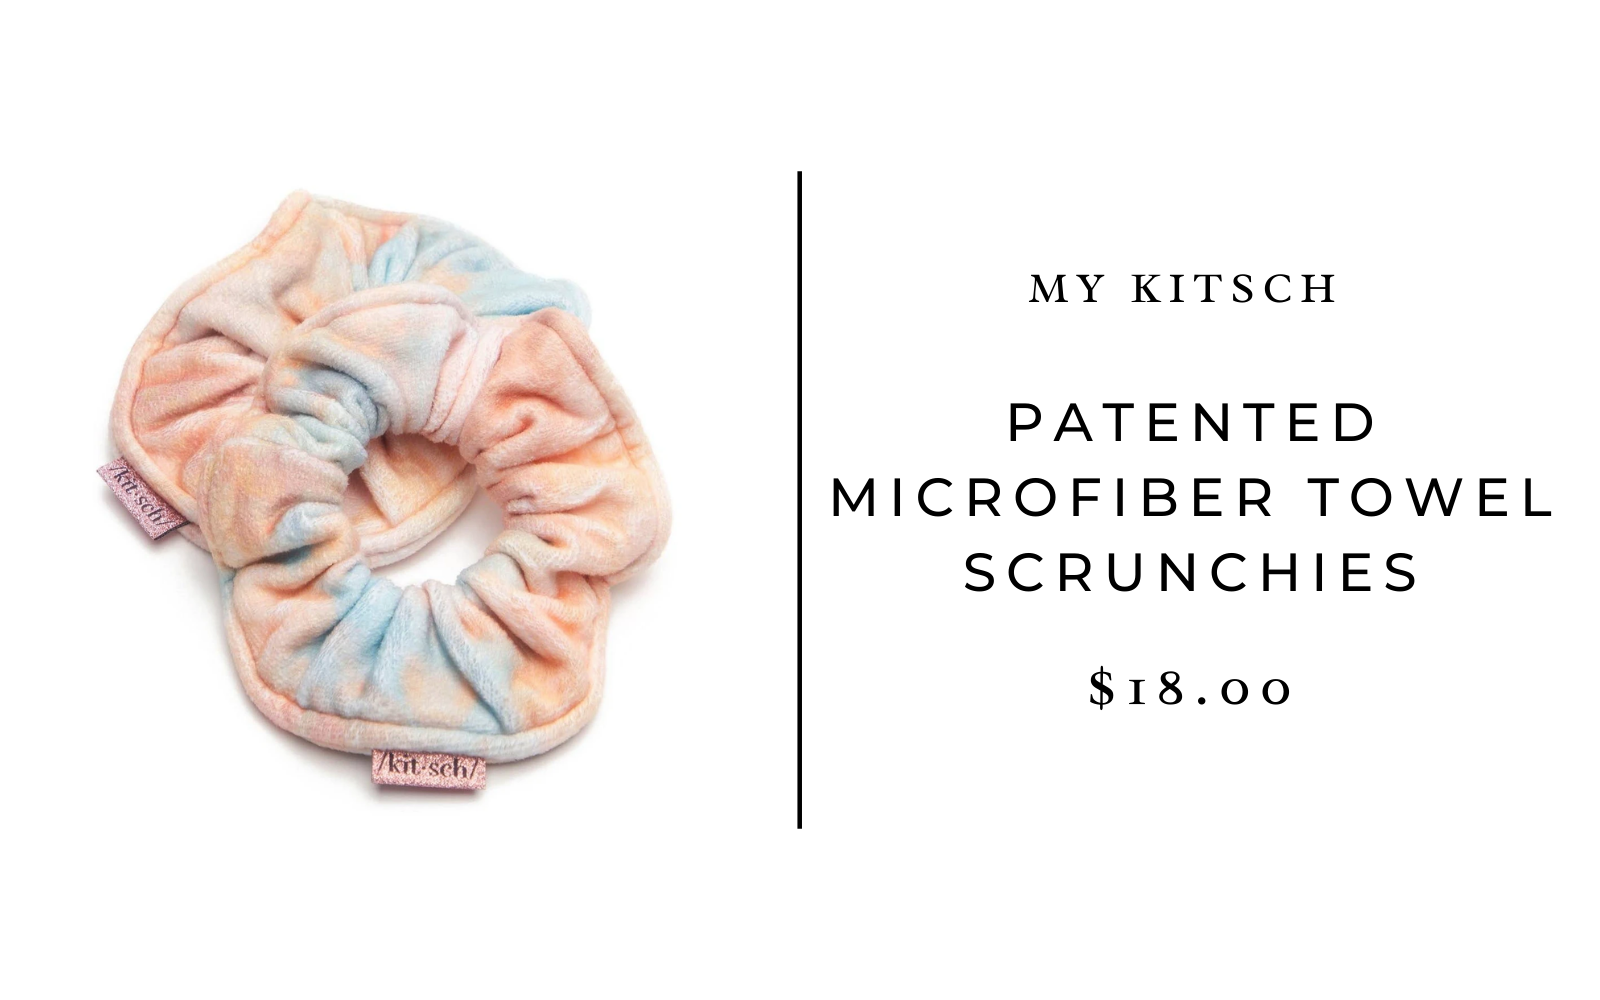 My Kitsch Microfiber Towel Scrunchies